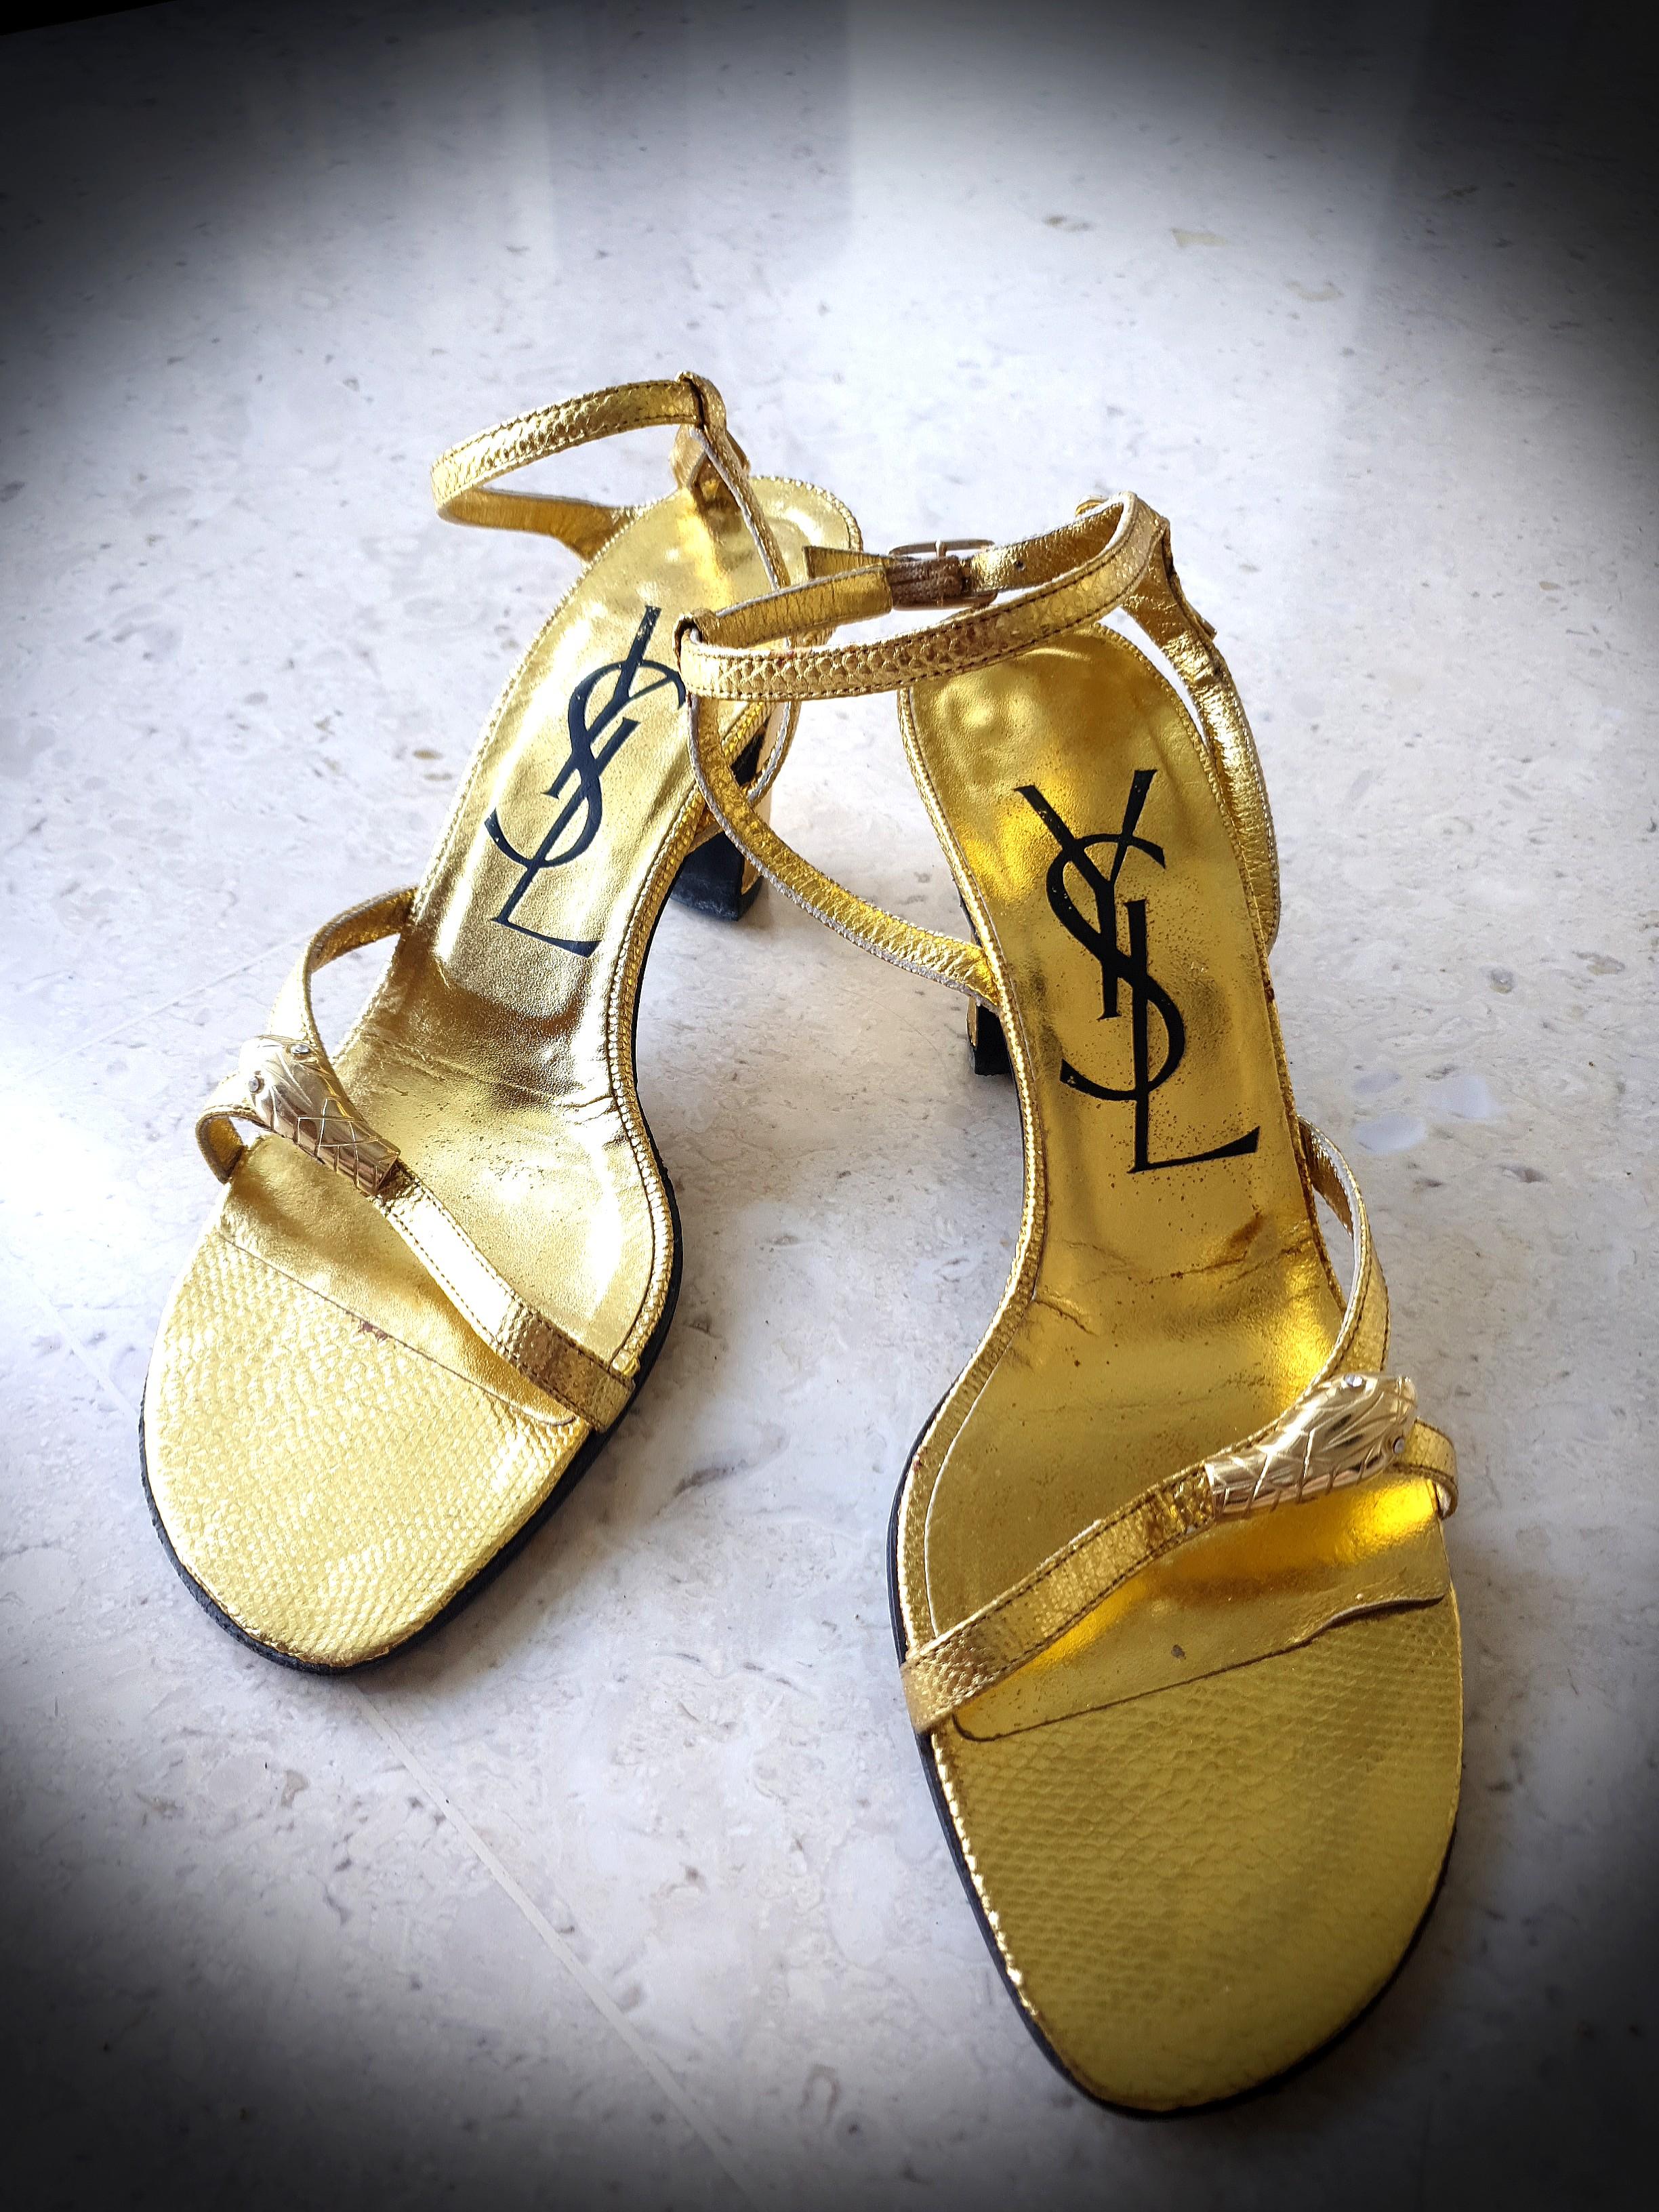 ysl gold heels